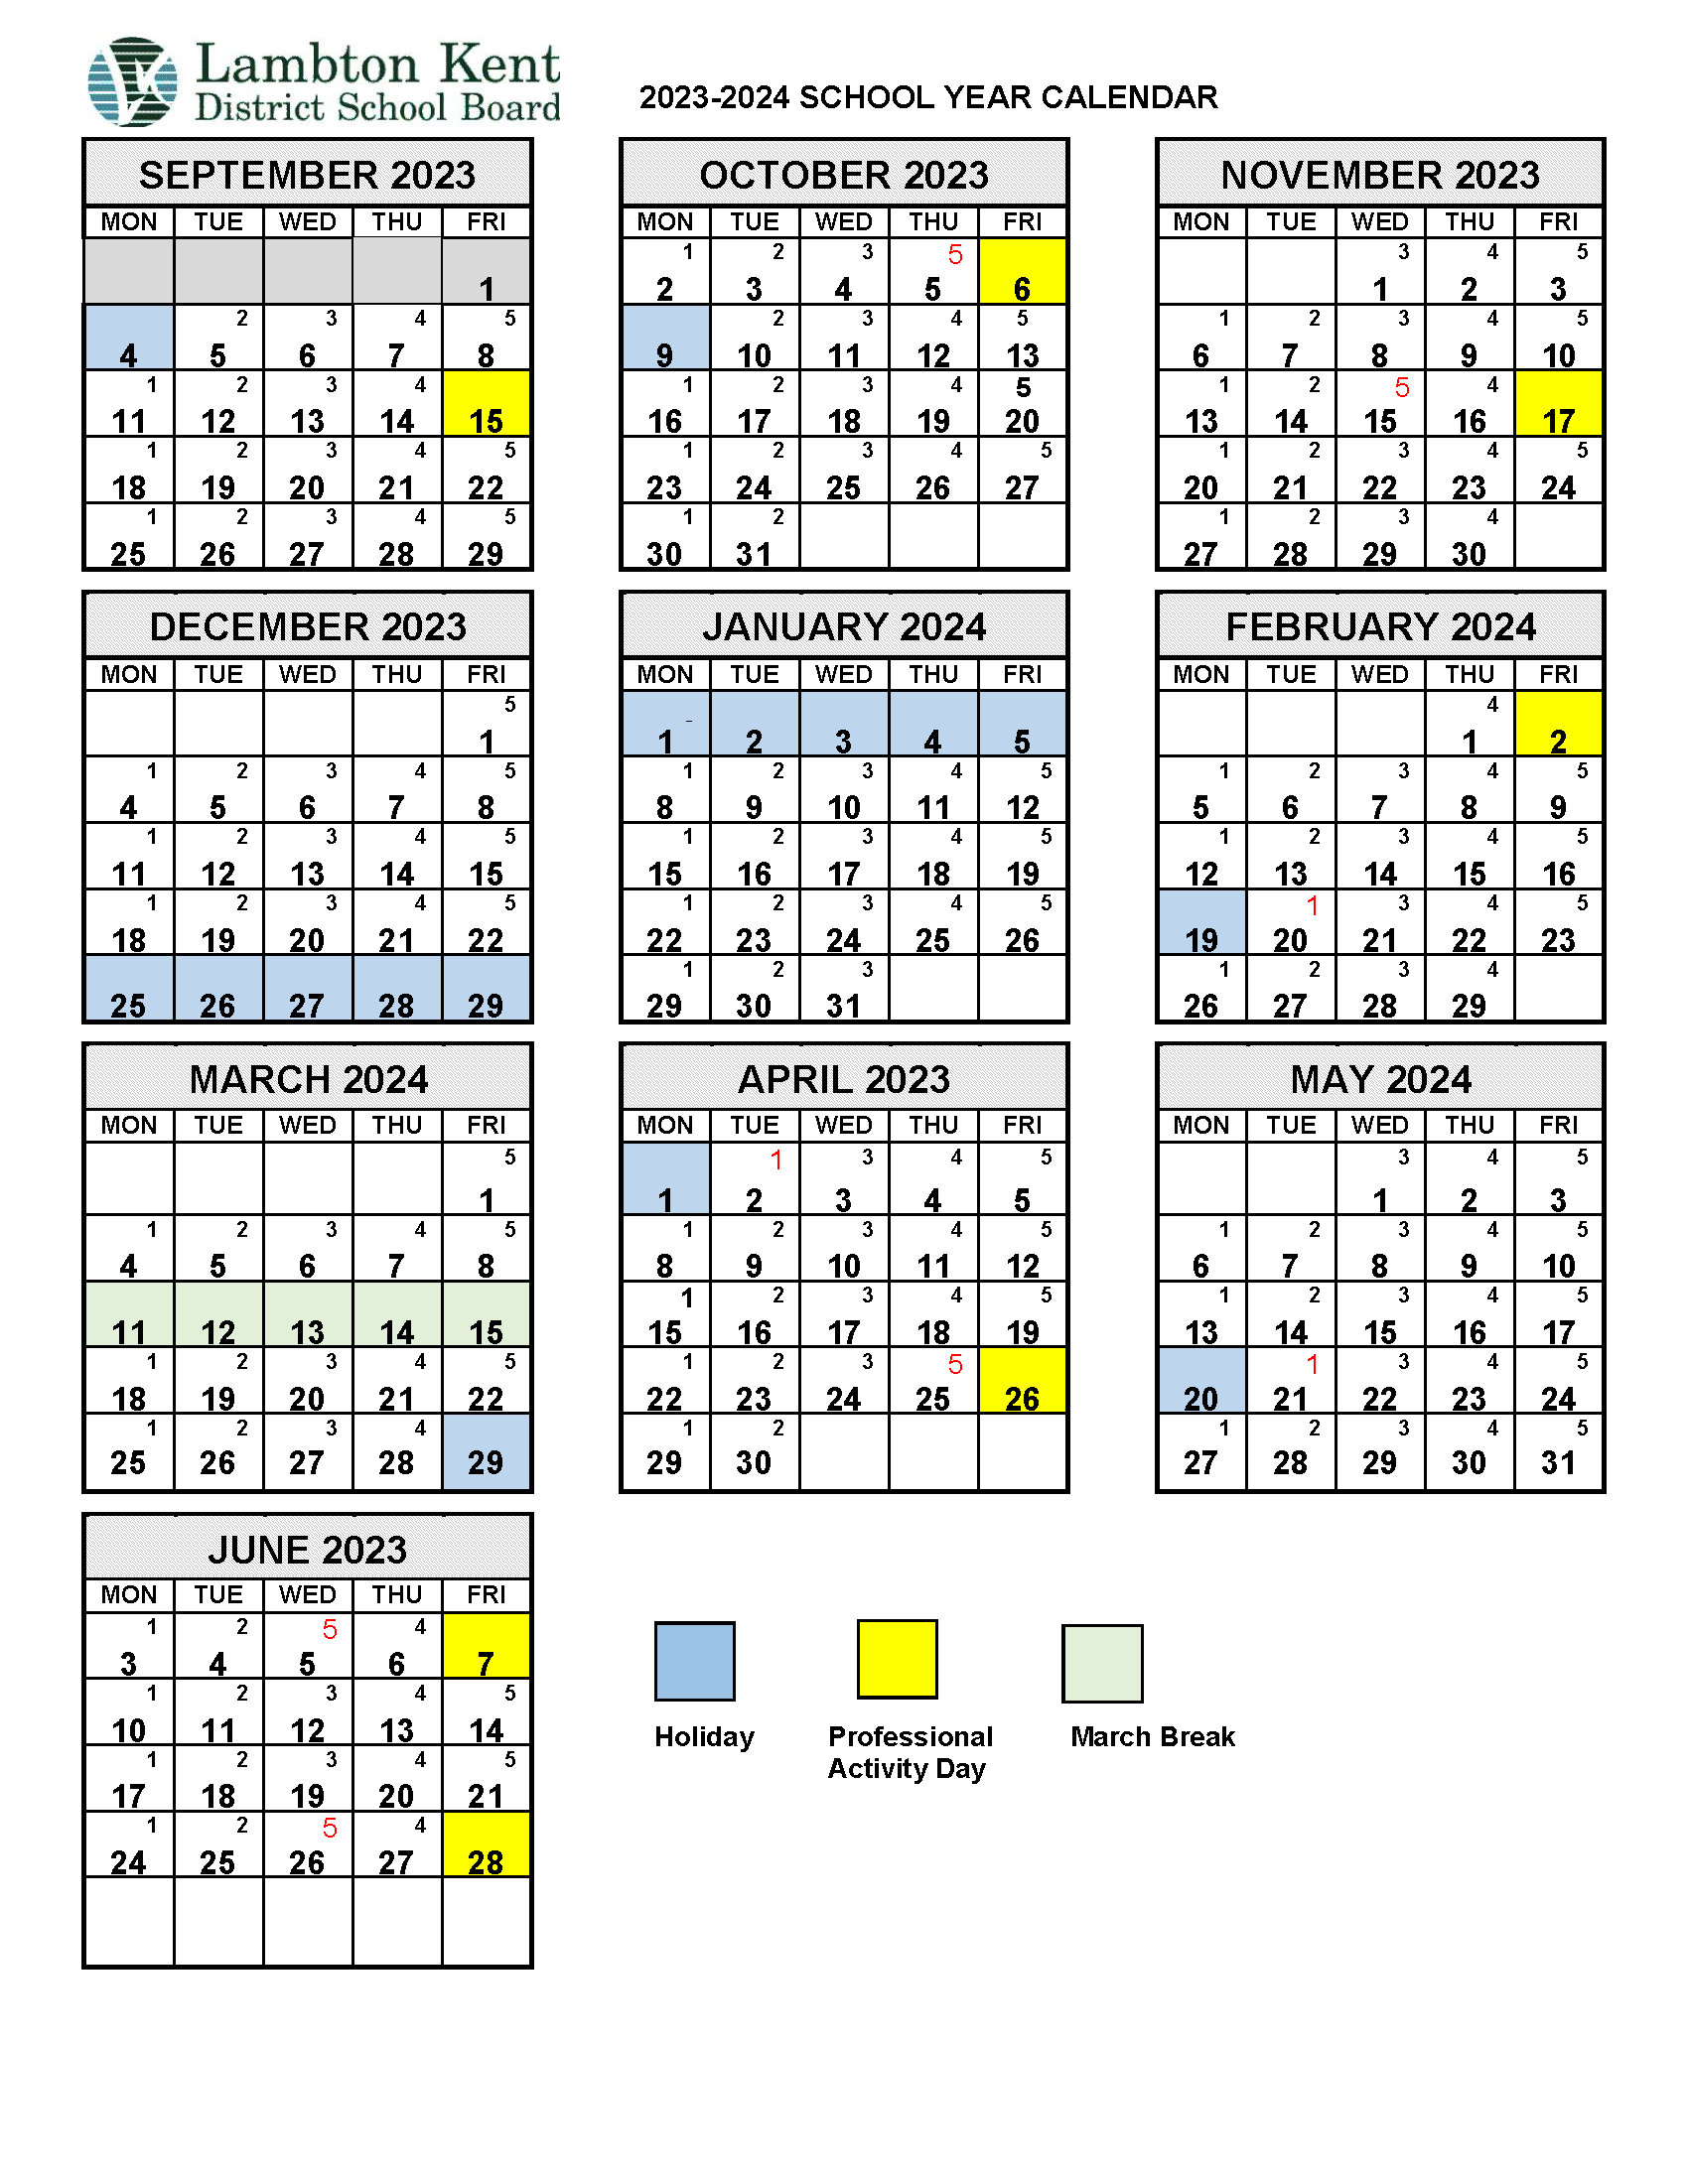 Pps Calendar 2022 23 Pdf Elementary Calendar - Lambton Kent District School Board